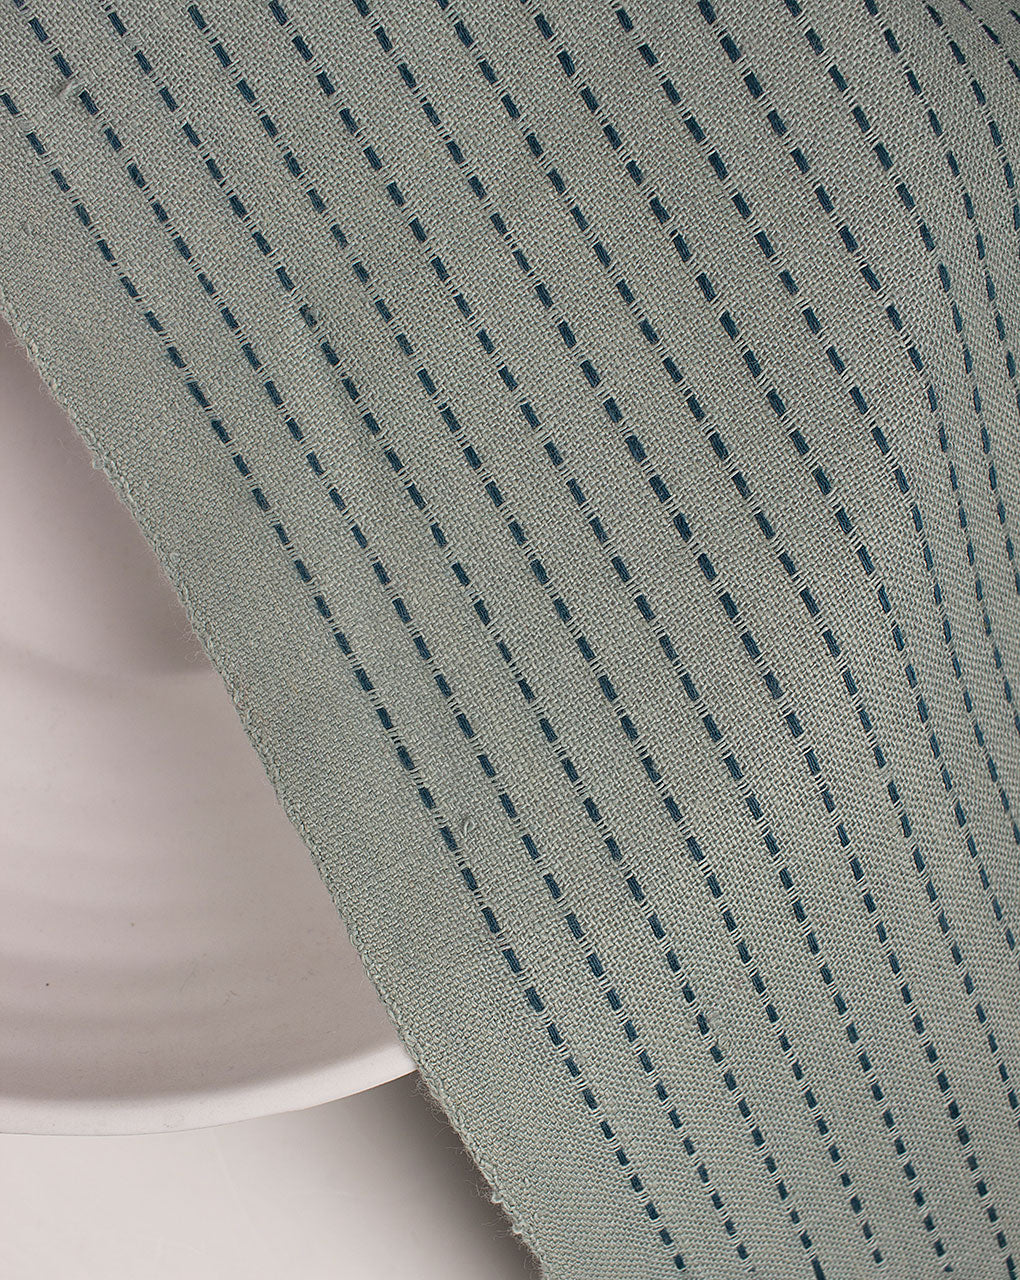 Loom Textured Kantha Cotton Fabric - Fabriclore.com